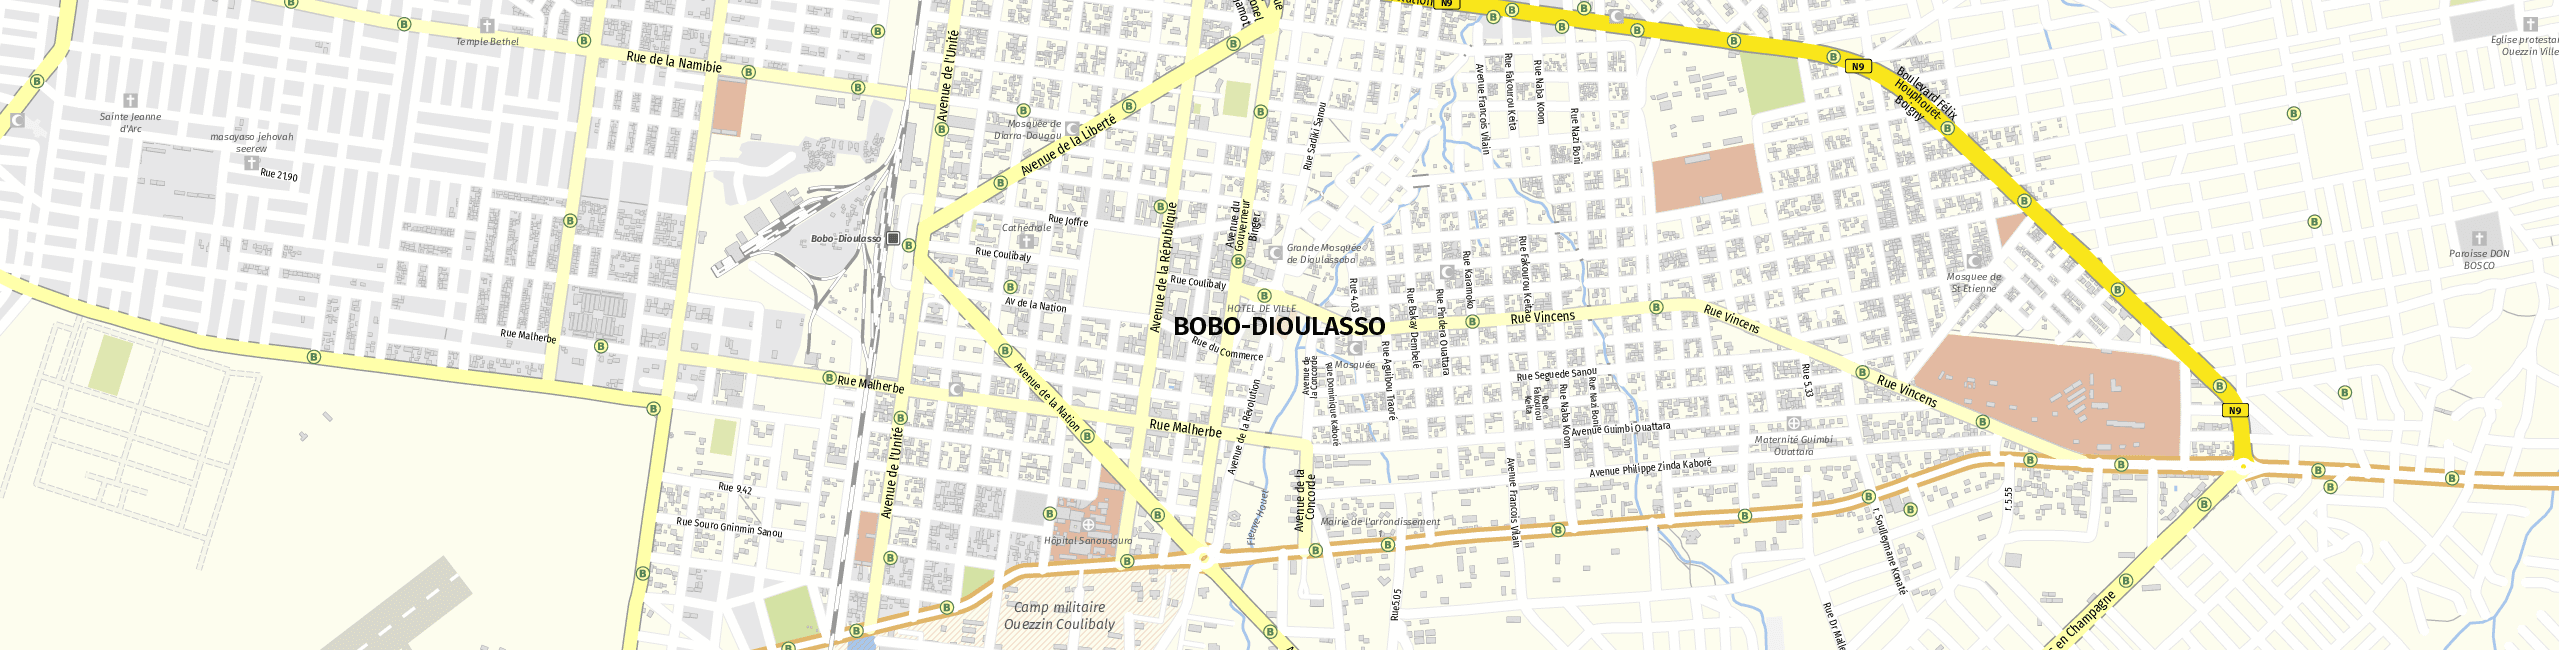 Stadtplan Bobo-Dioulasso zum Downloaden.